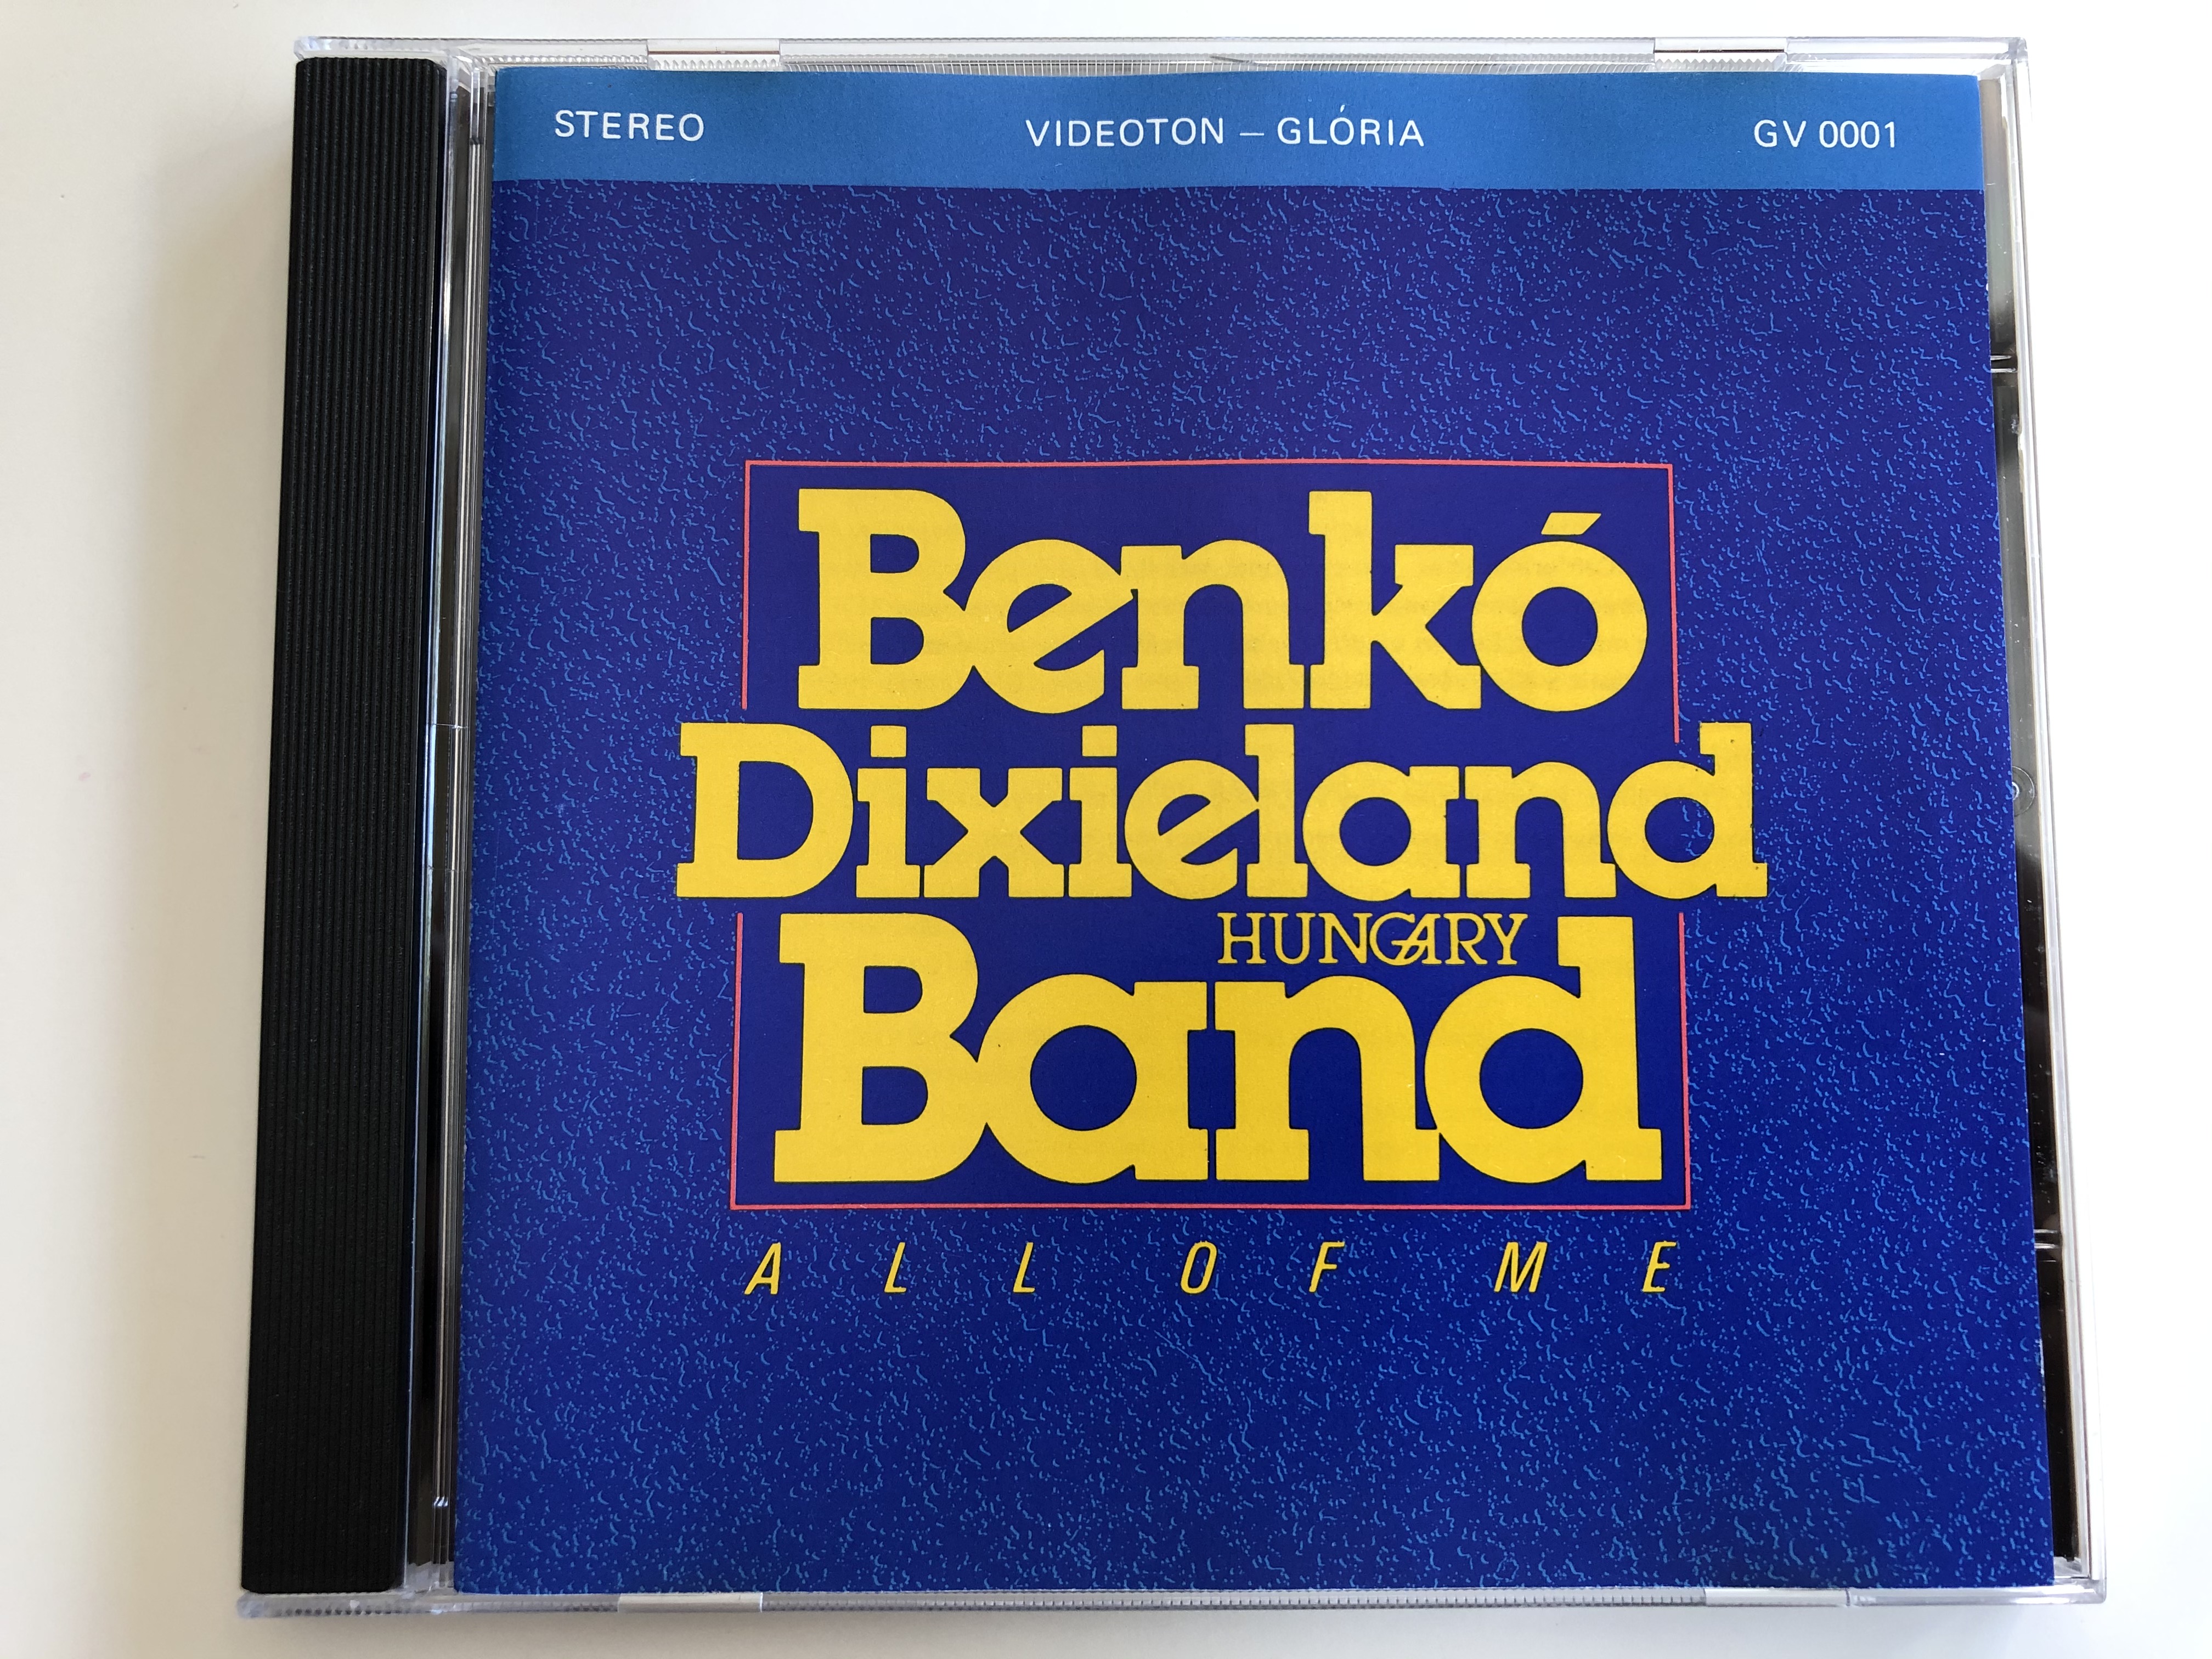 benk-dixieland-hungary-band-all-of-me-videoton-gloria-audio-cd-1989-stereo-gv-0001-1-.jpg